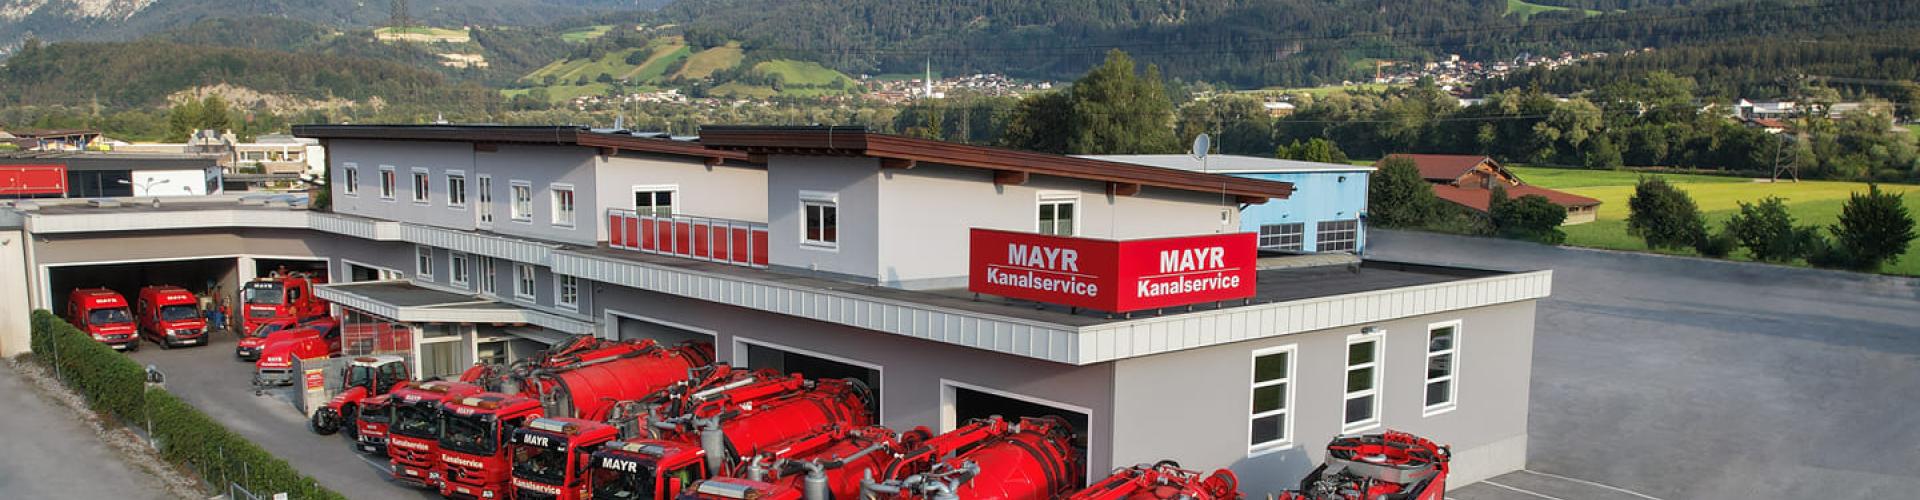 Mayr Kanalservice GmbH cover